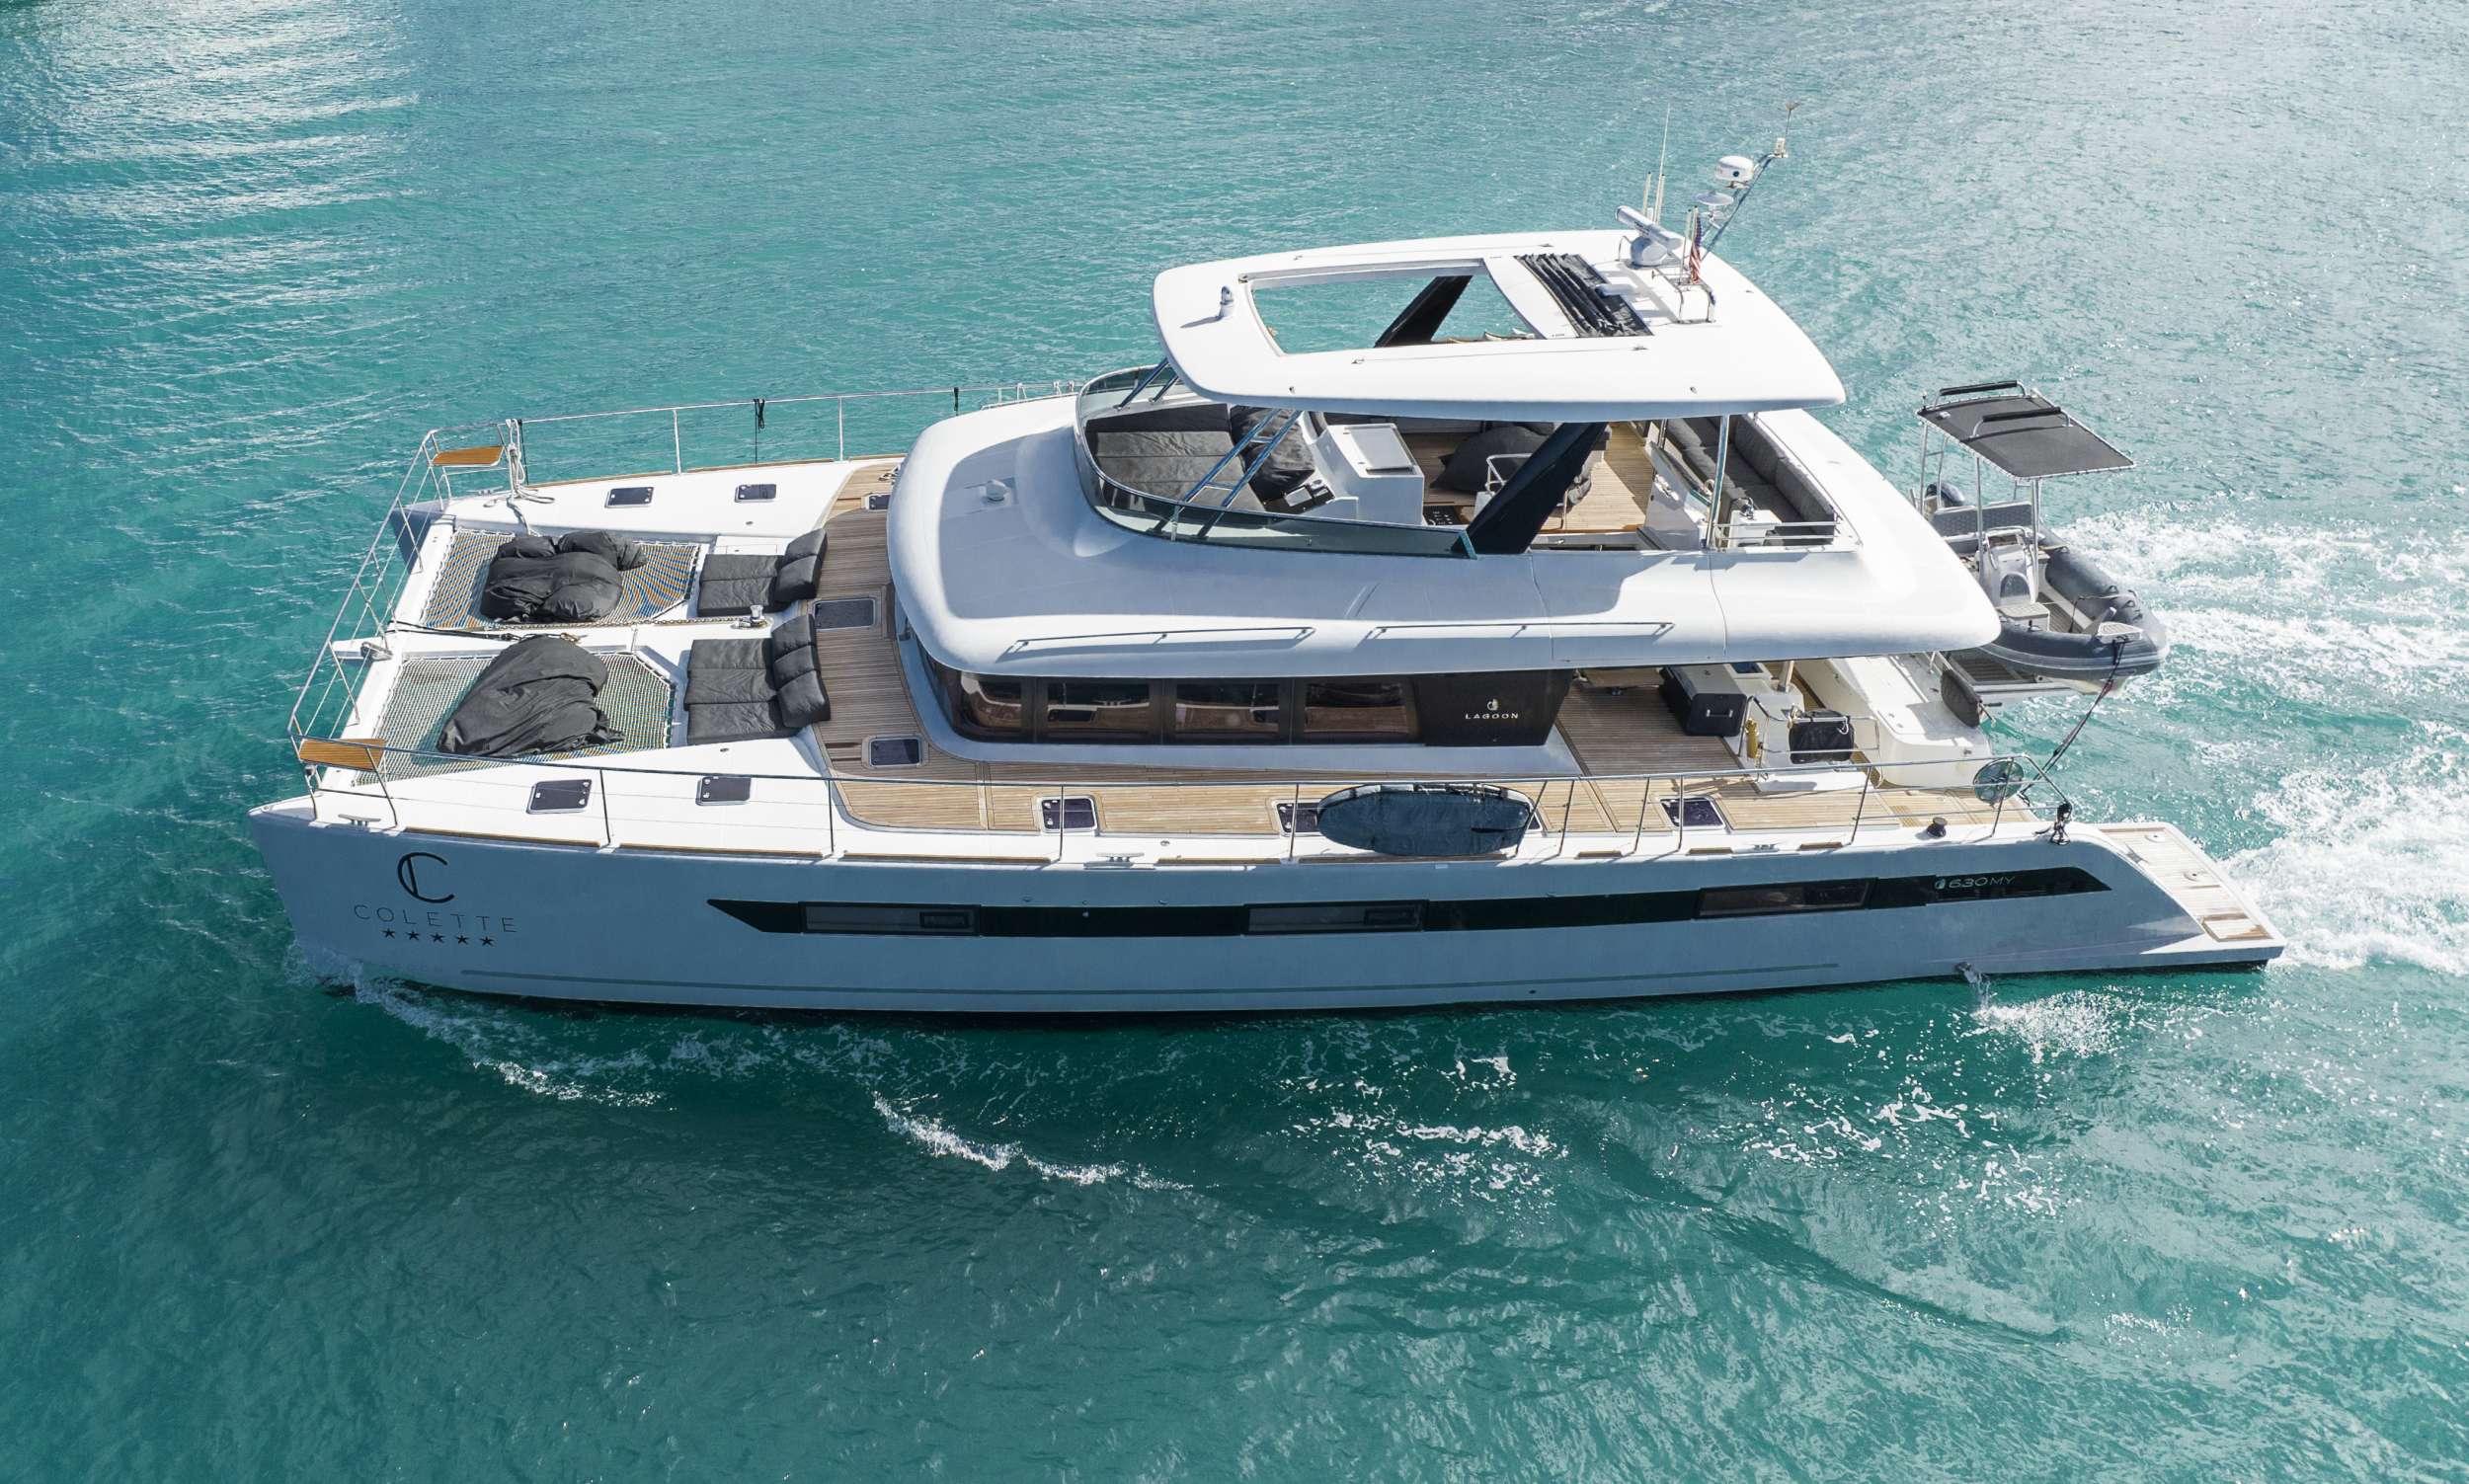 64ft Lagoon power catamaran HULYA operates in the Bahamas and the Caribbean